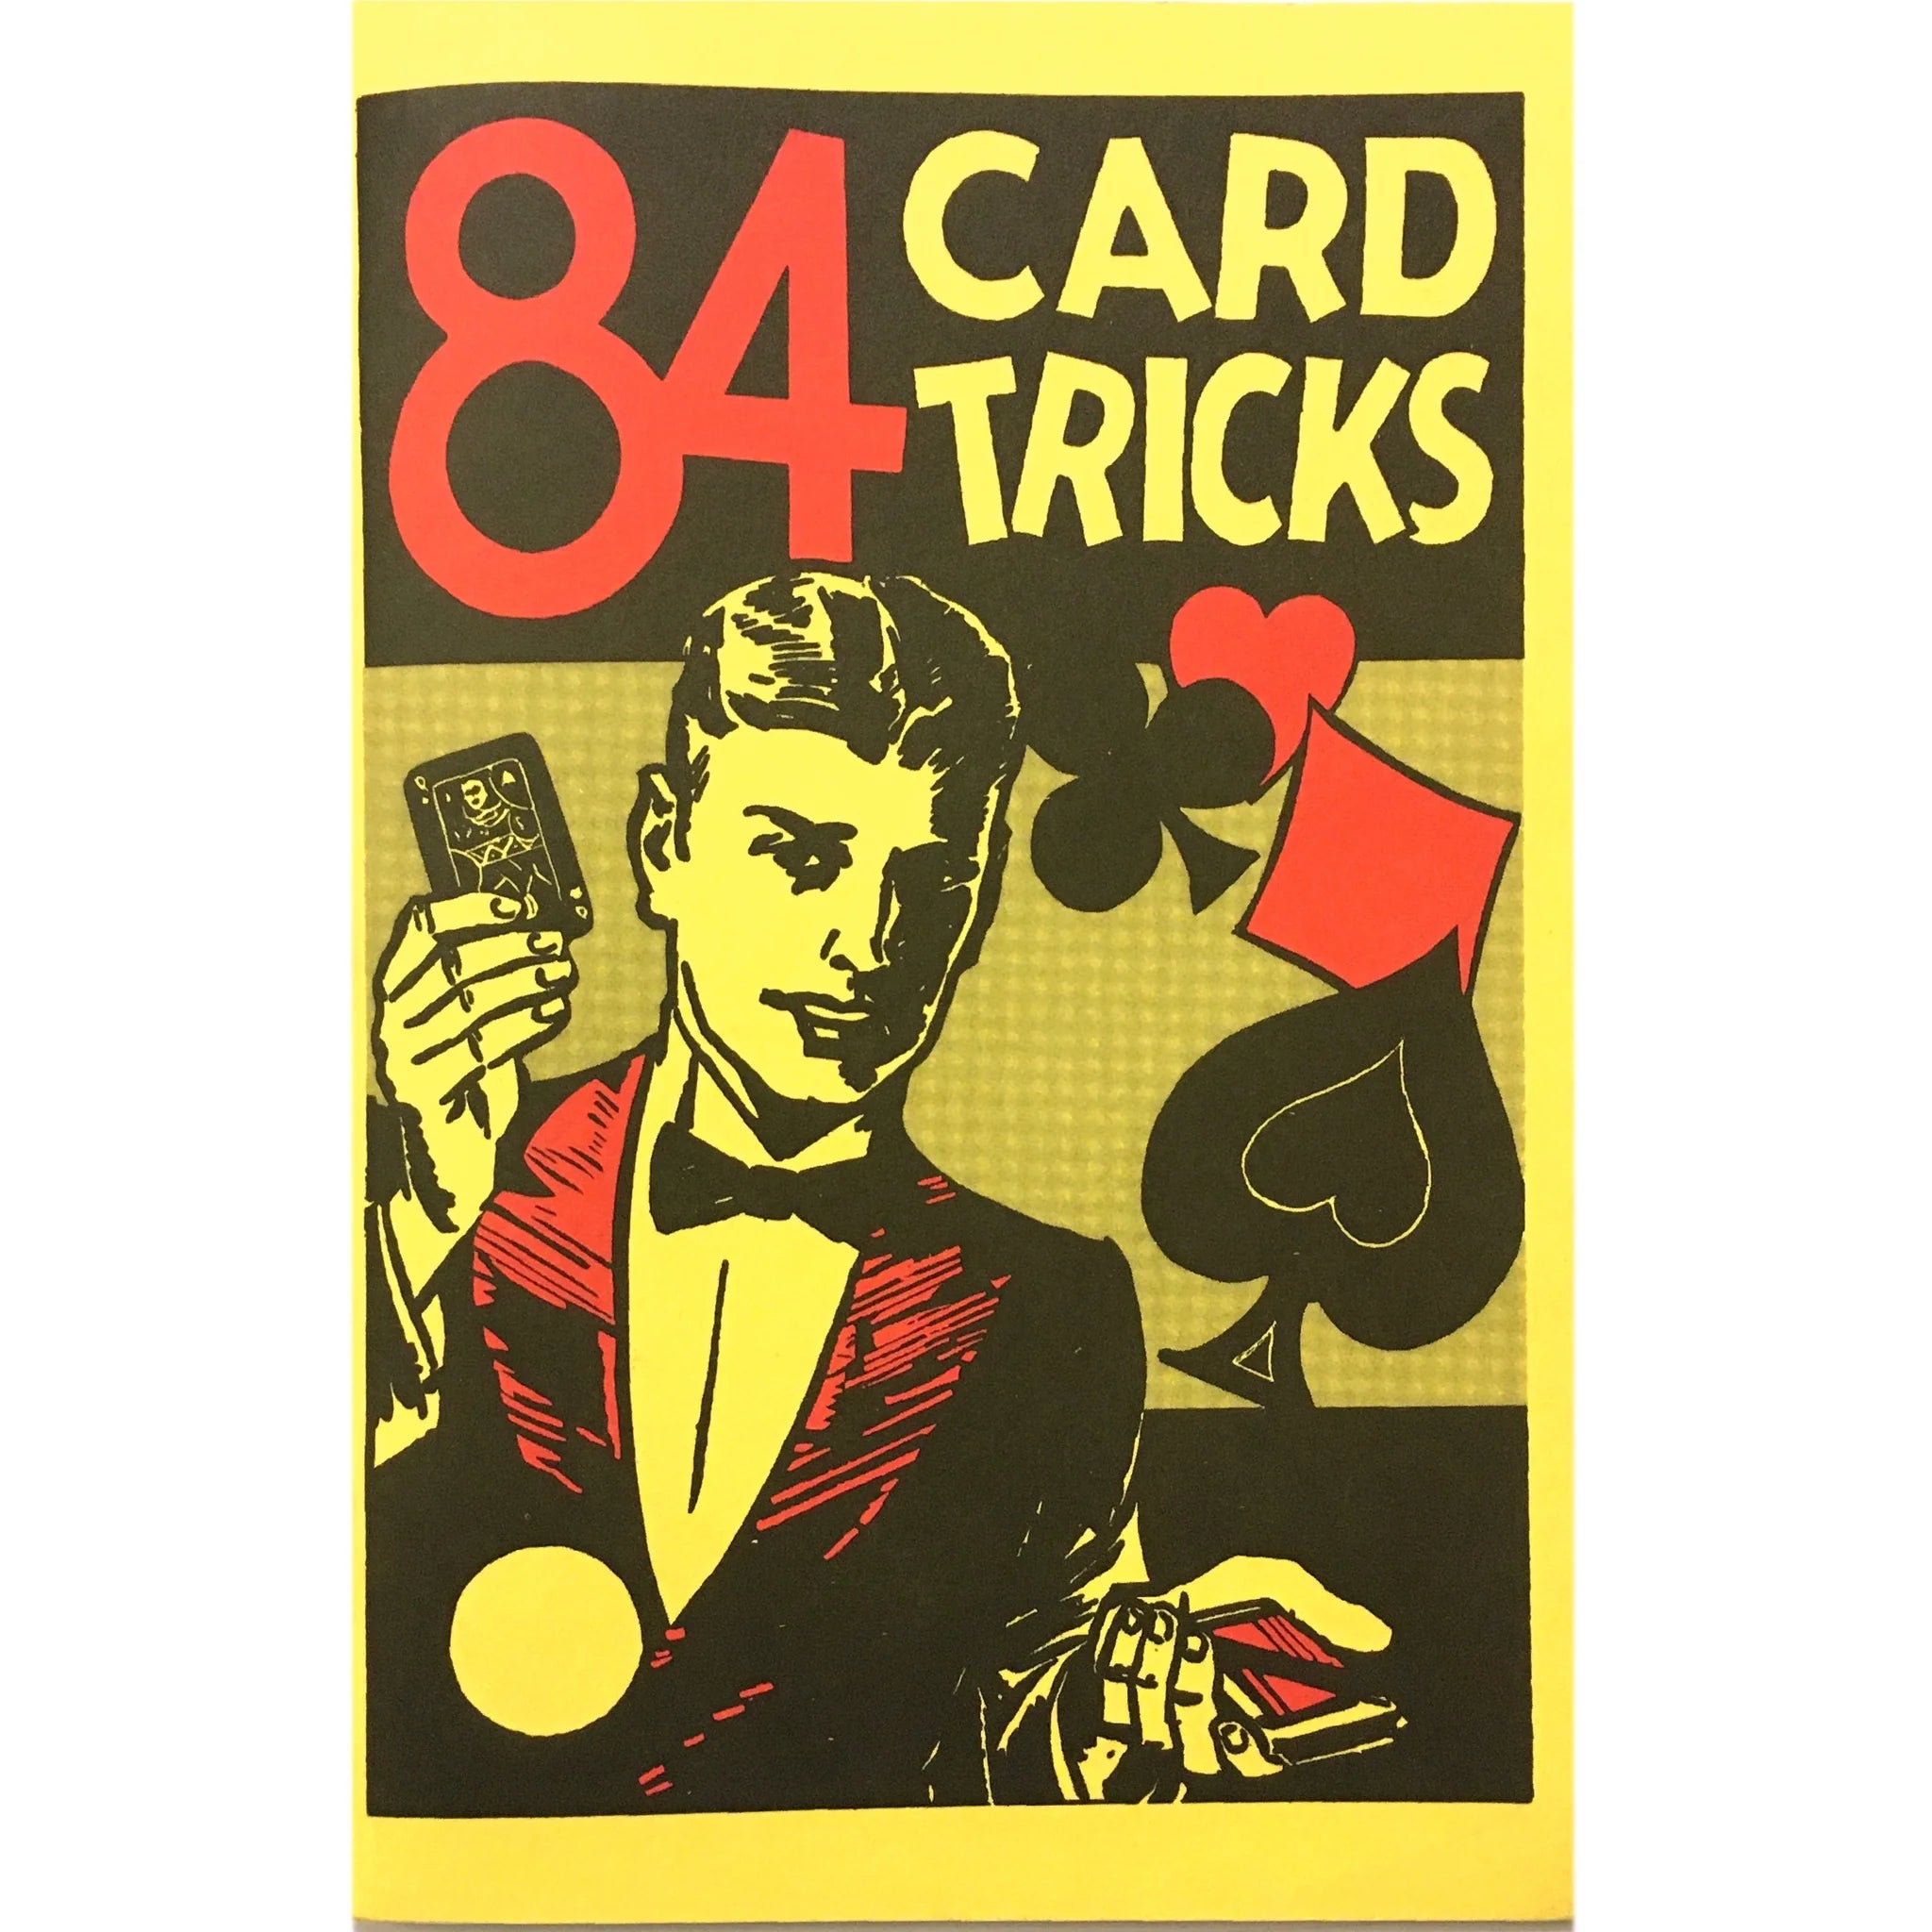 84 Card Tricks By Hugh Morris - Book